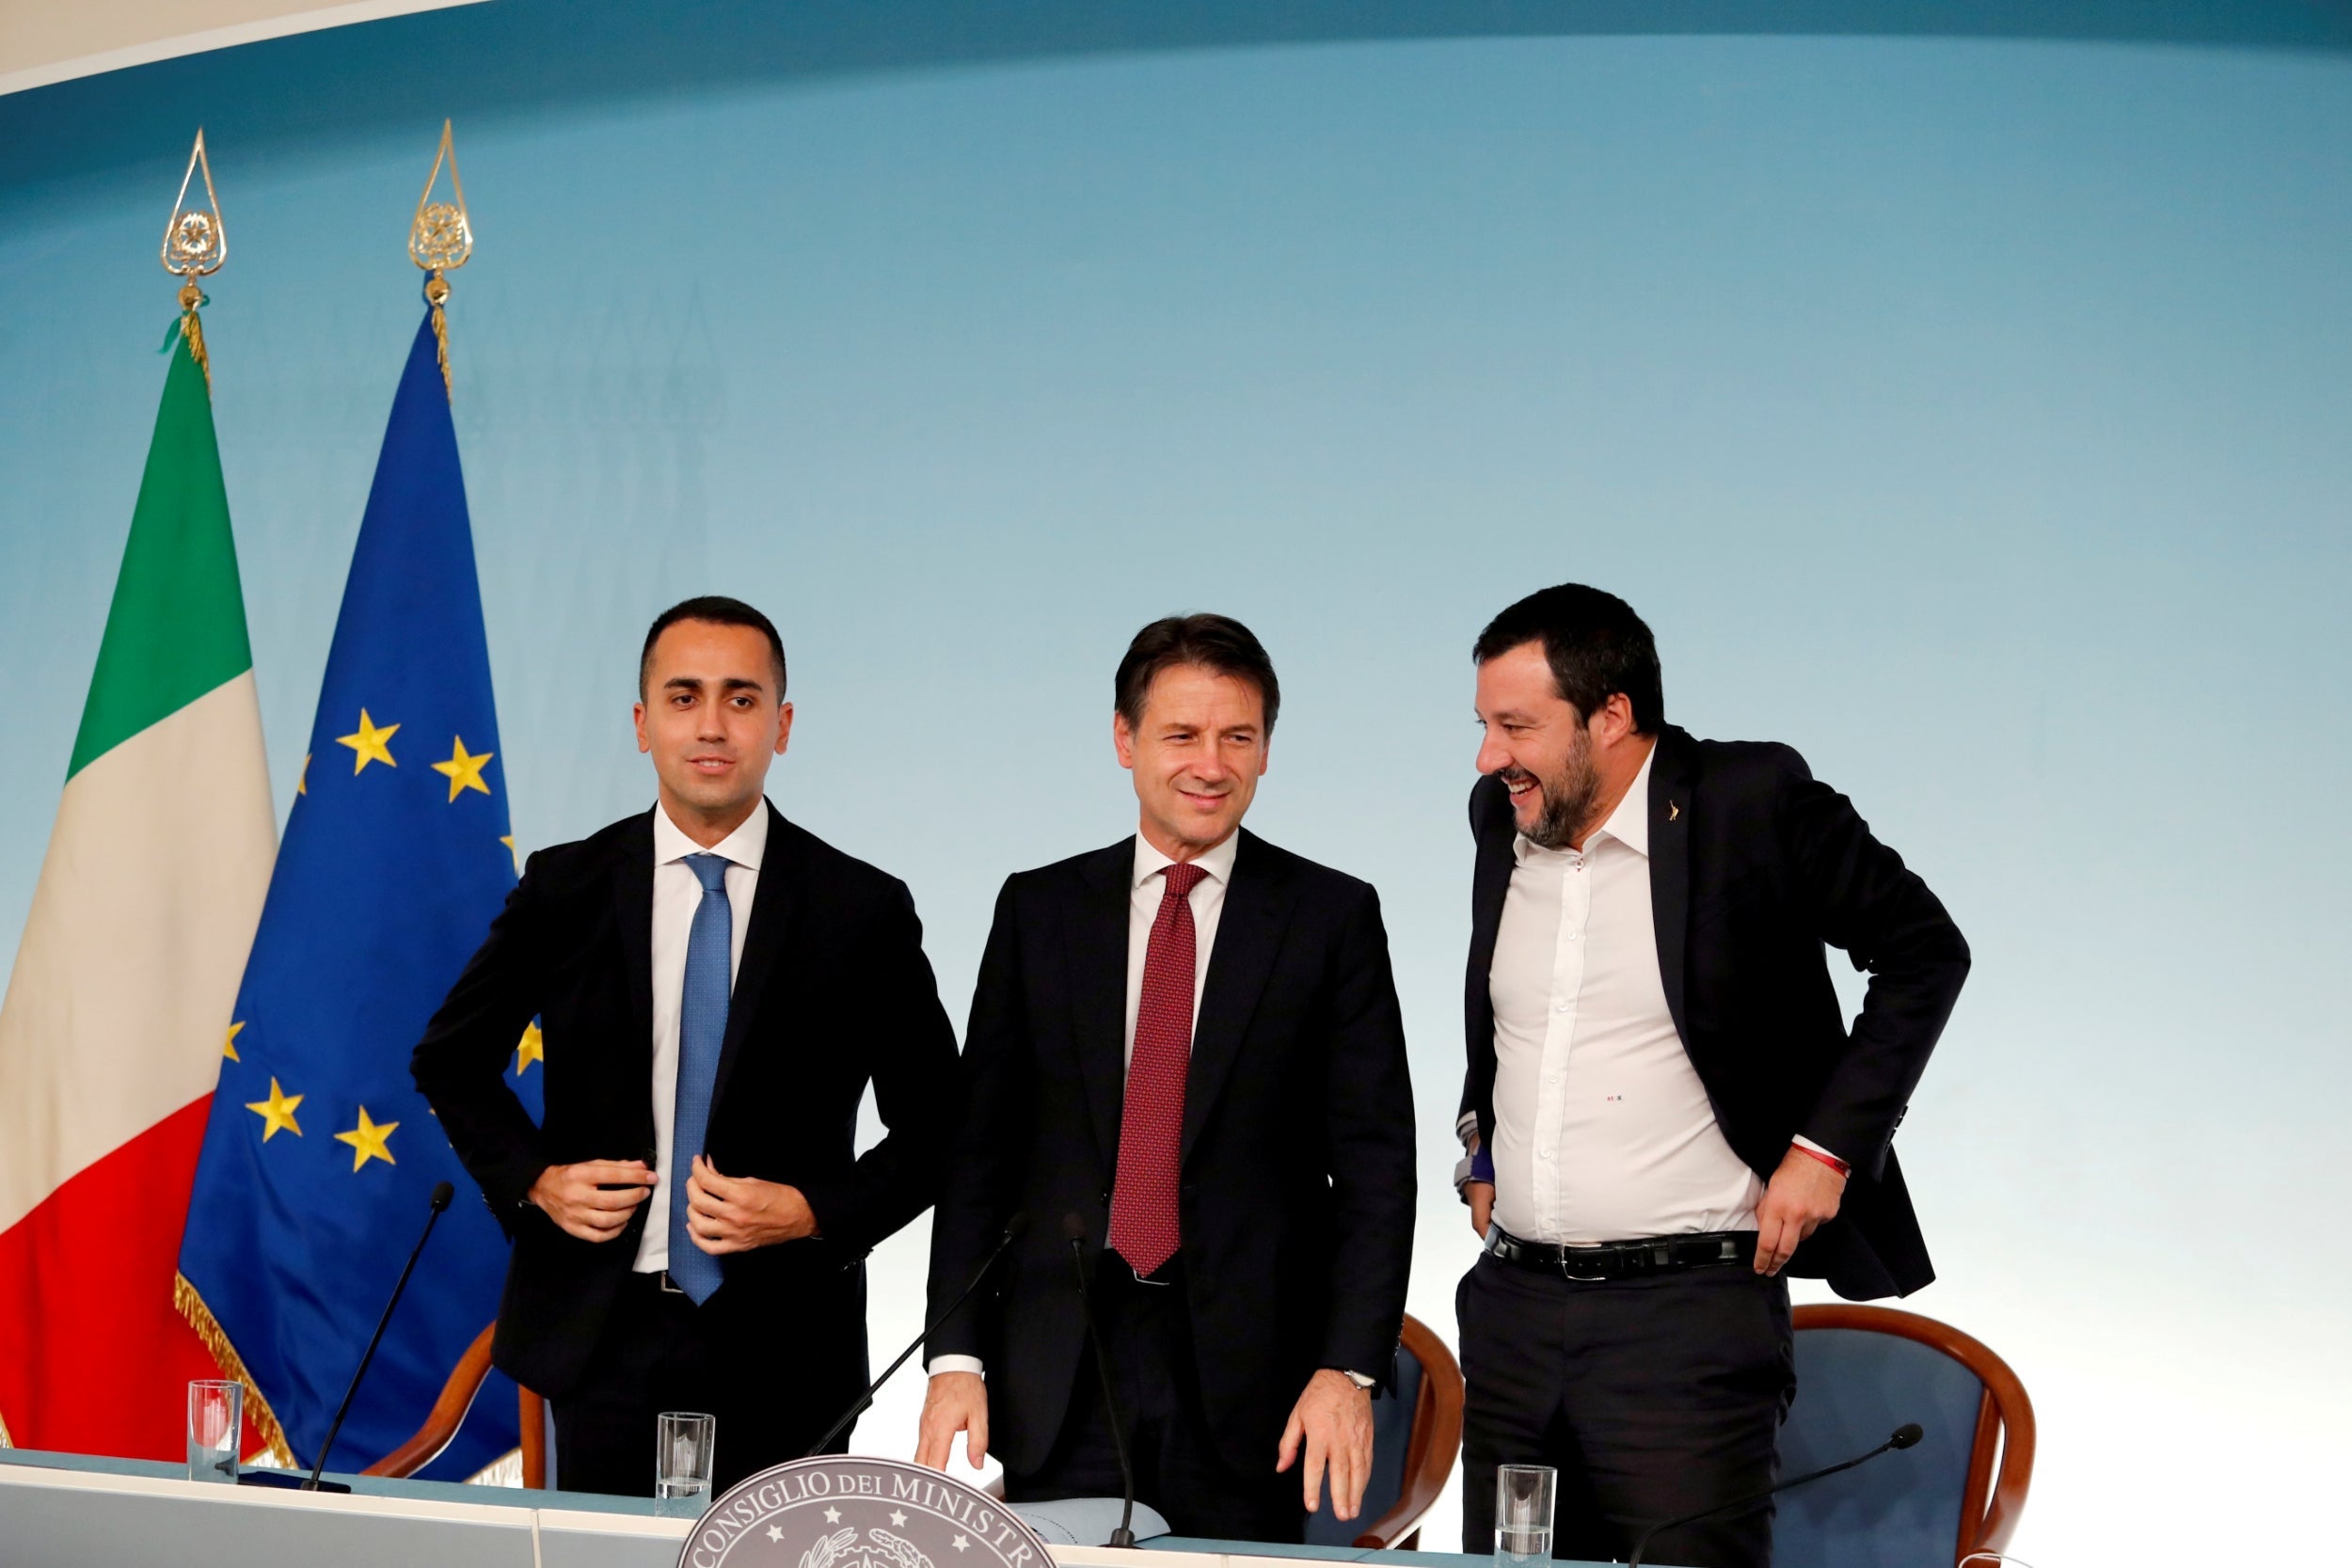 Luigi Di Maio, Giuseppe Conte and Matteo Salvini at Chigi Palace in Rome